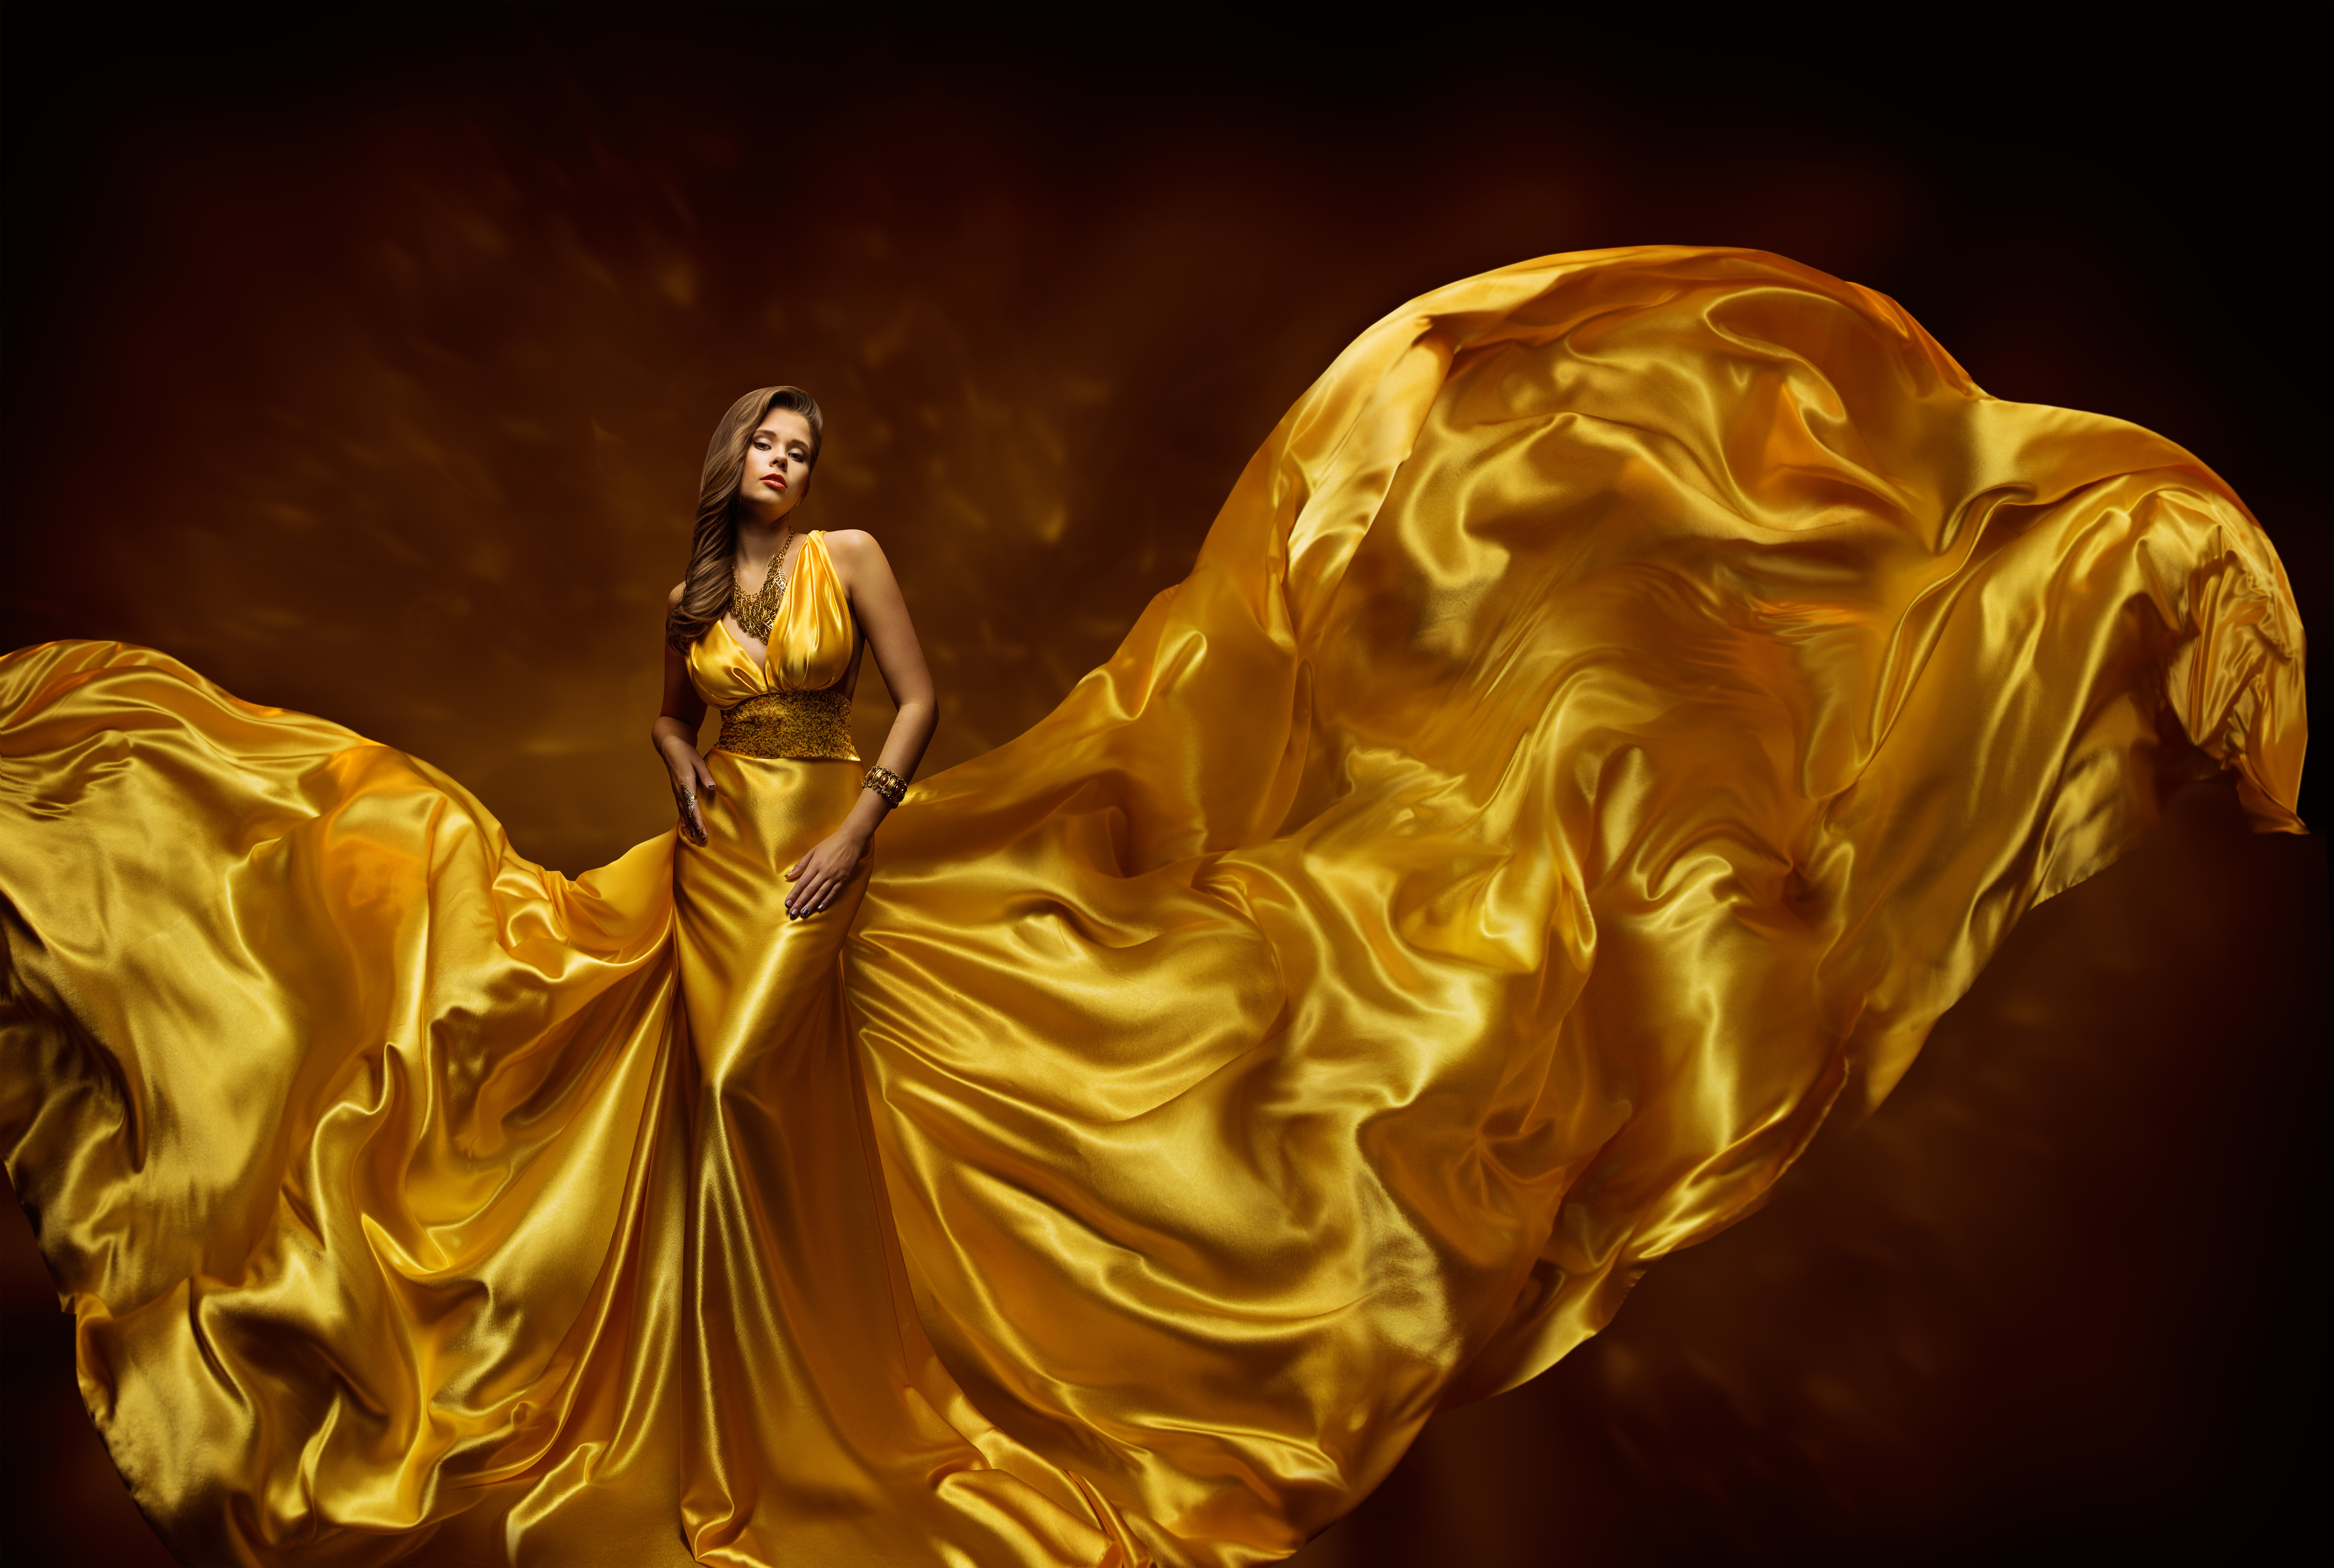 Amazing Gold Dress 5k Retina Ultra HD Wallpaper And Background